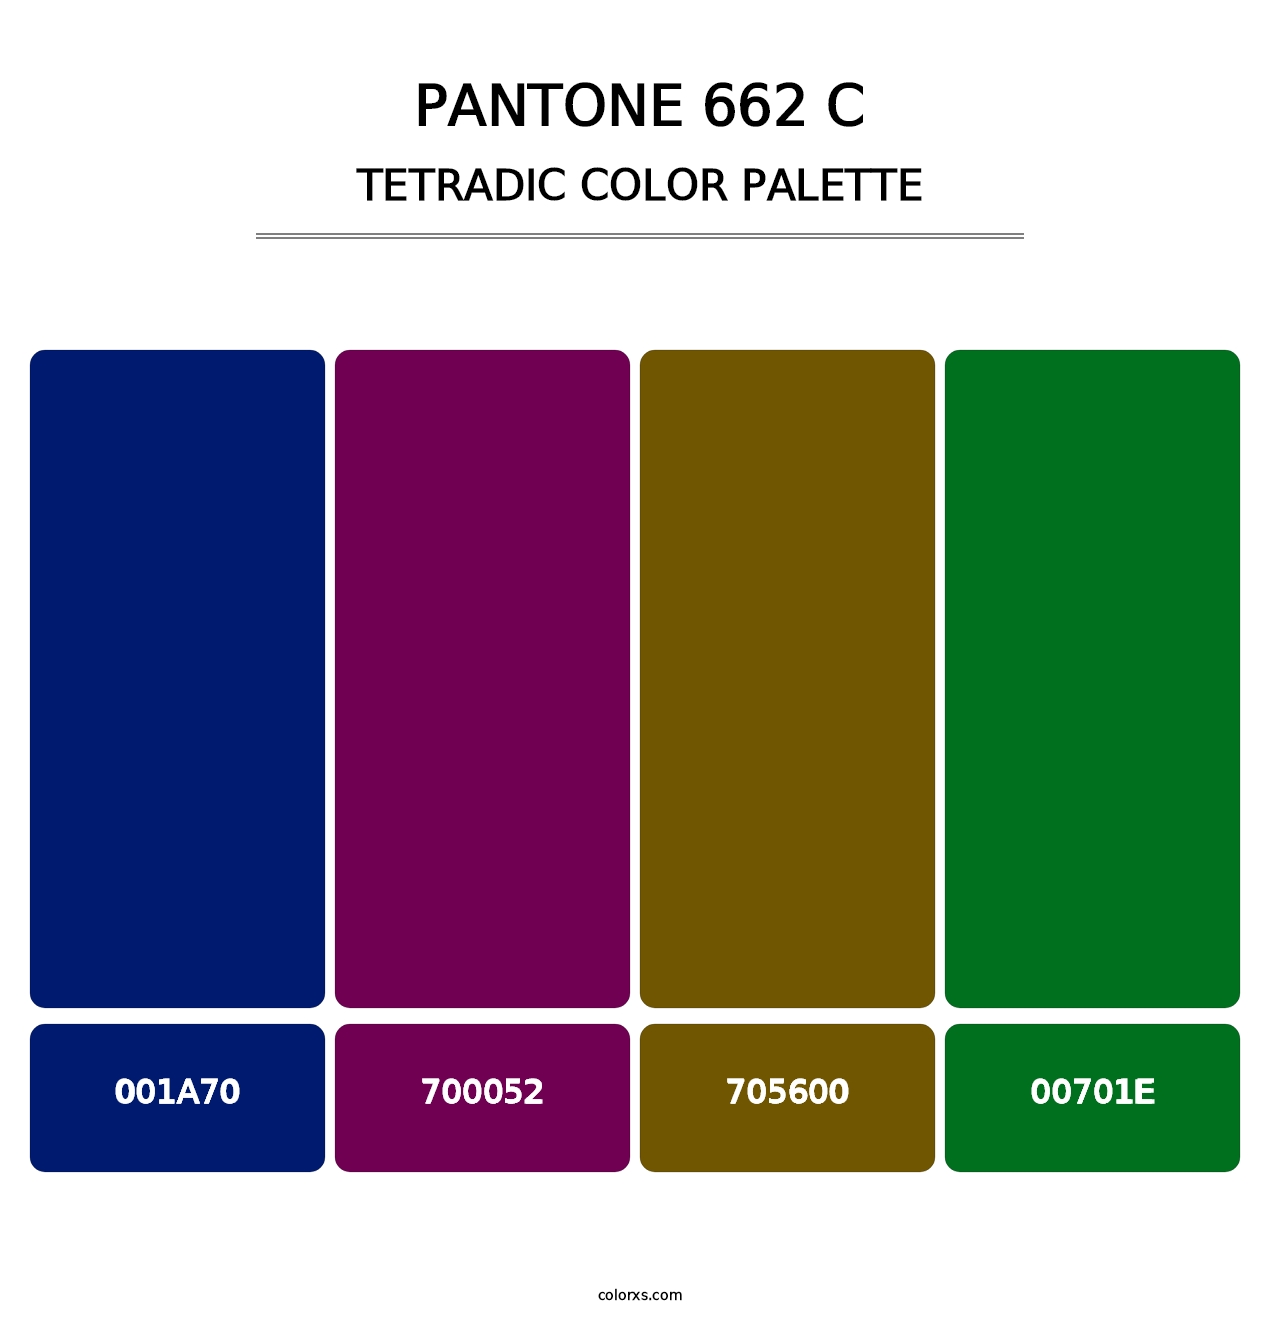 PANTONE 662 C - Tetradic Color Palette